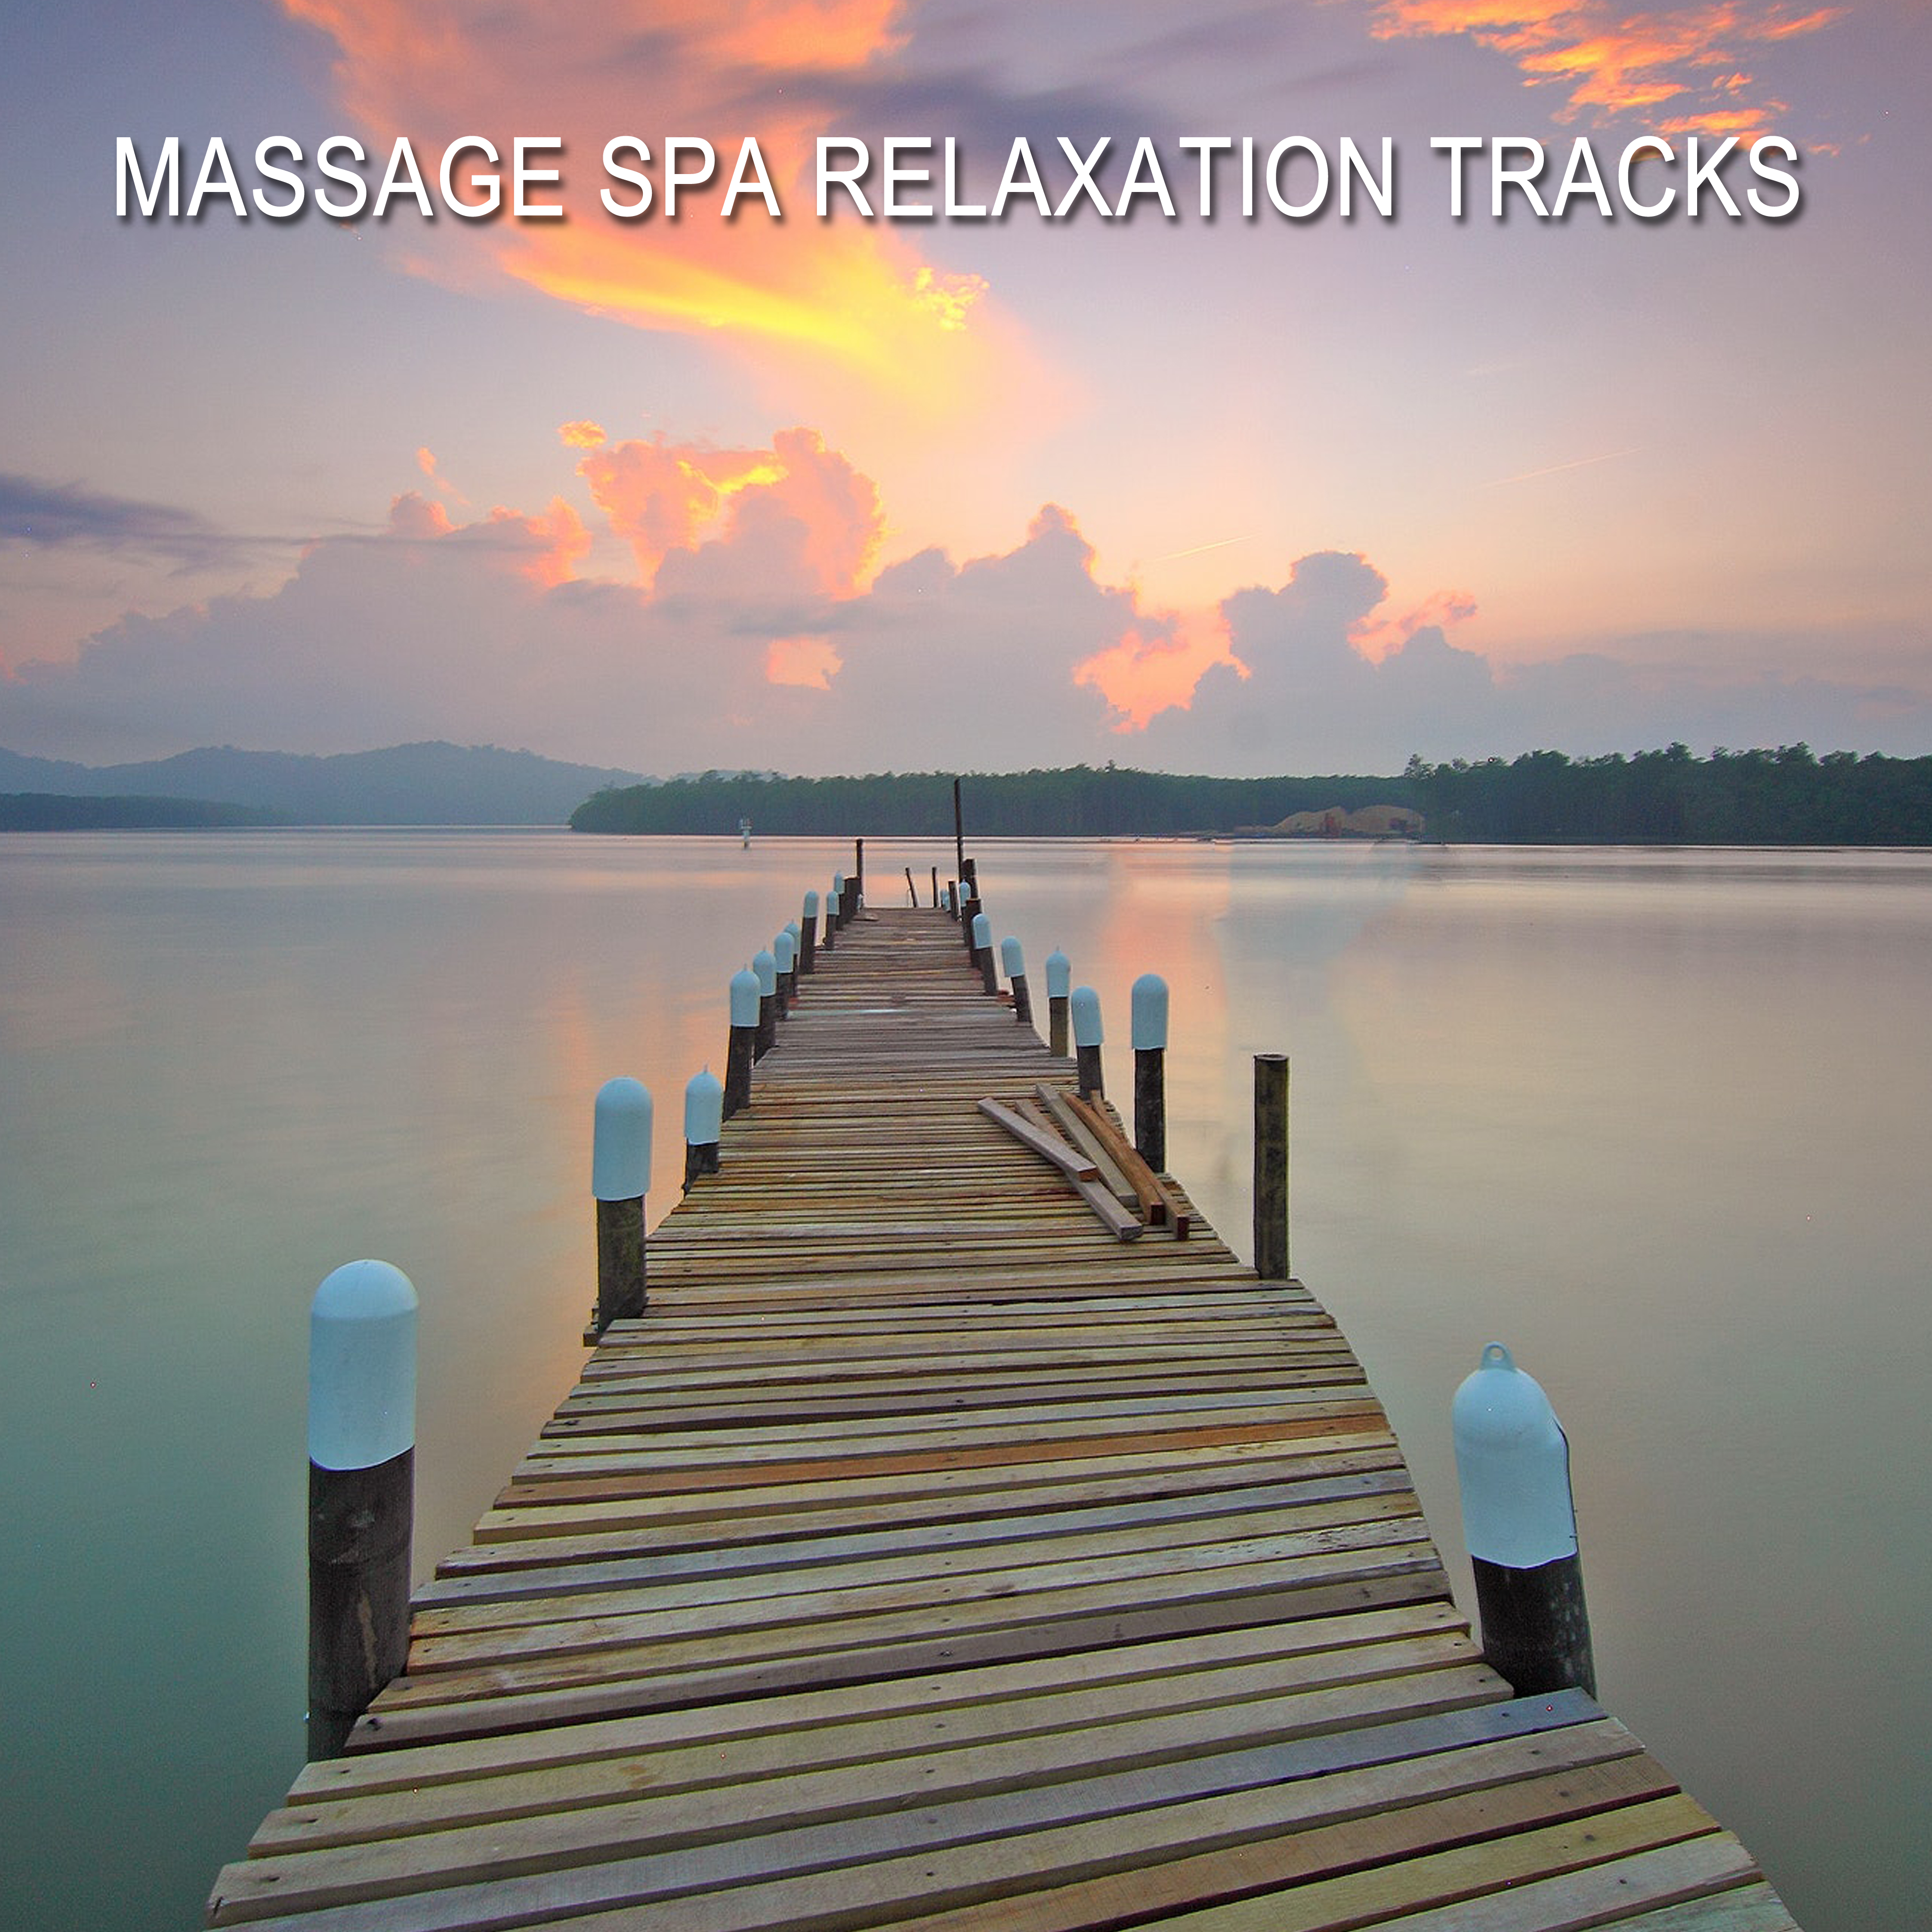 12 Massage Spa Relaxation Tracks